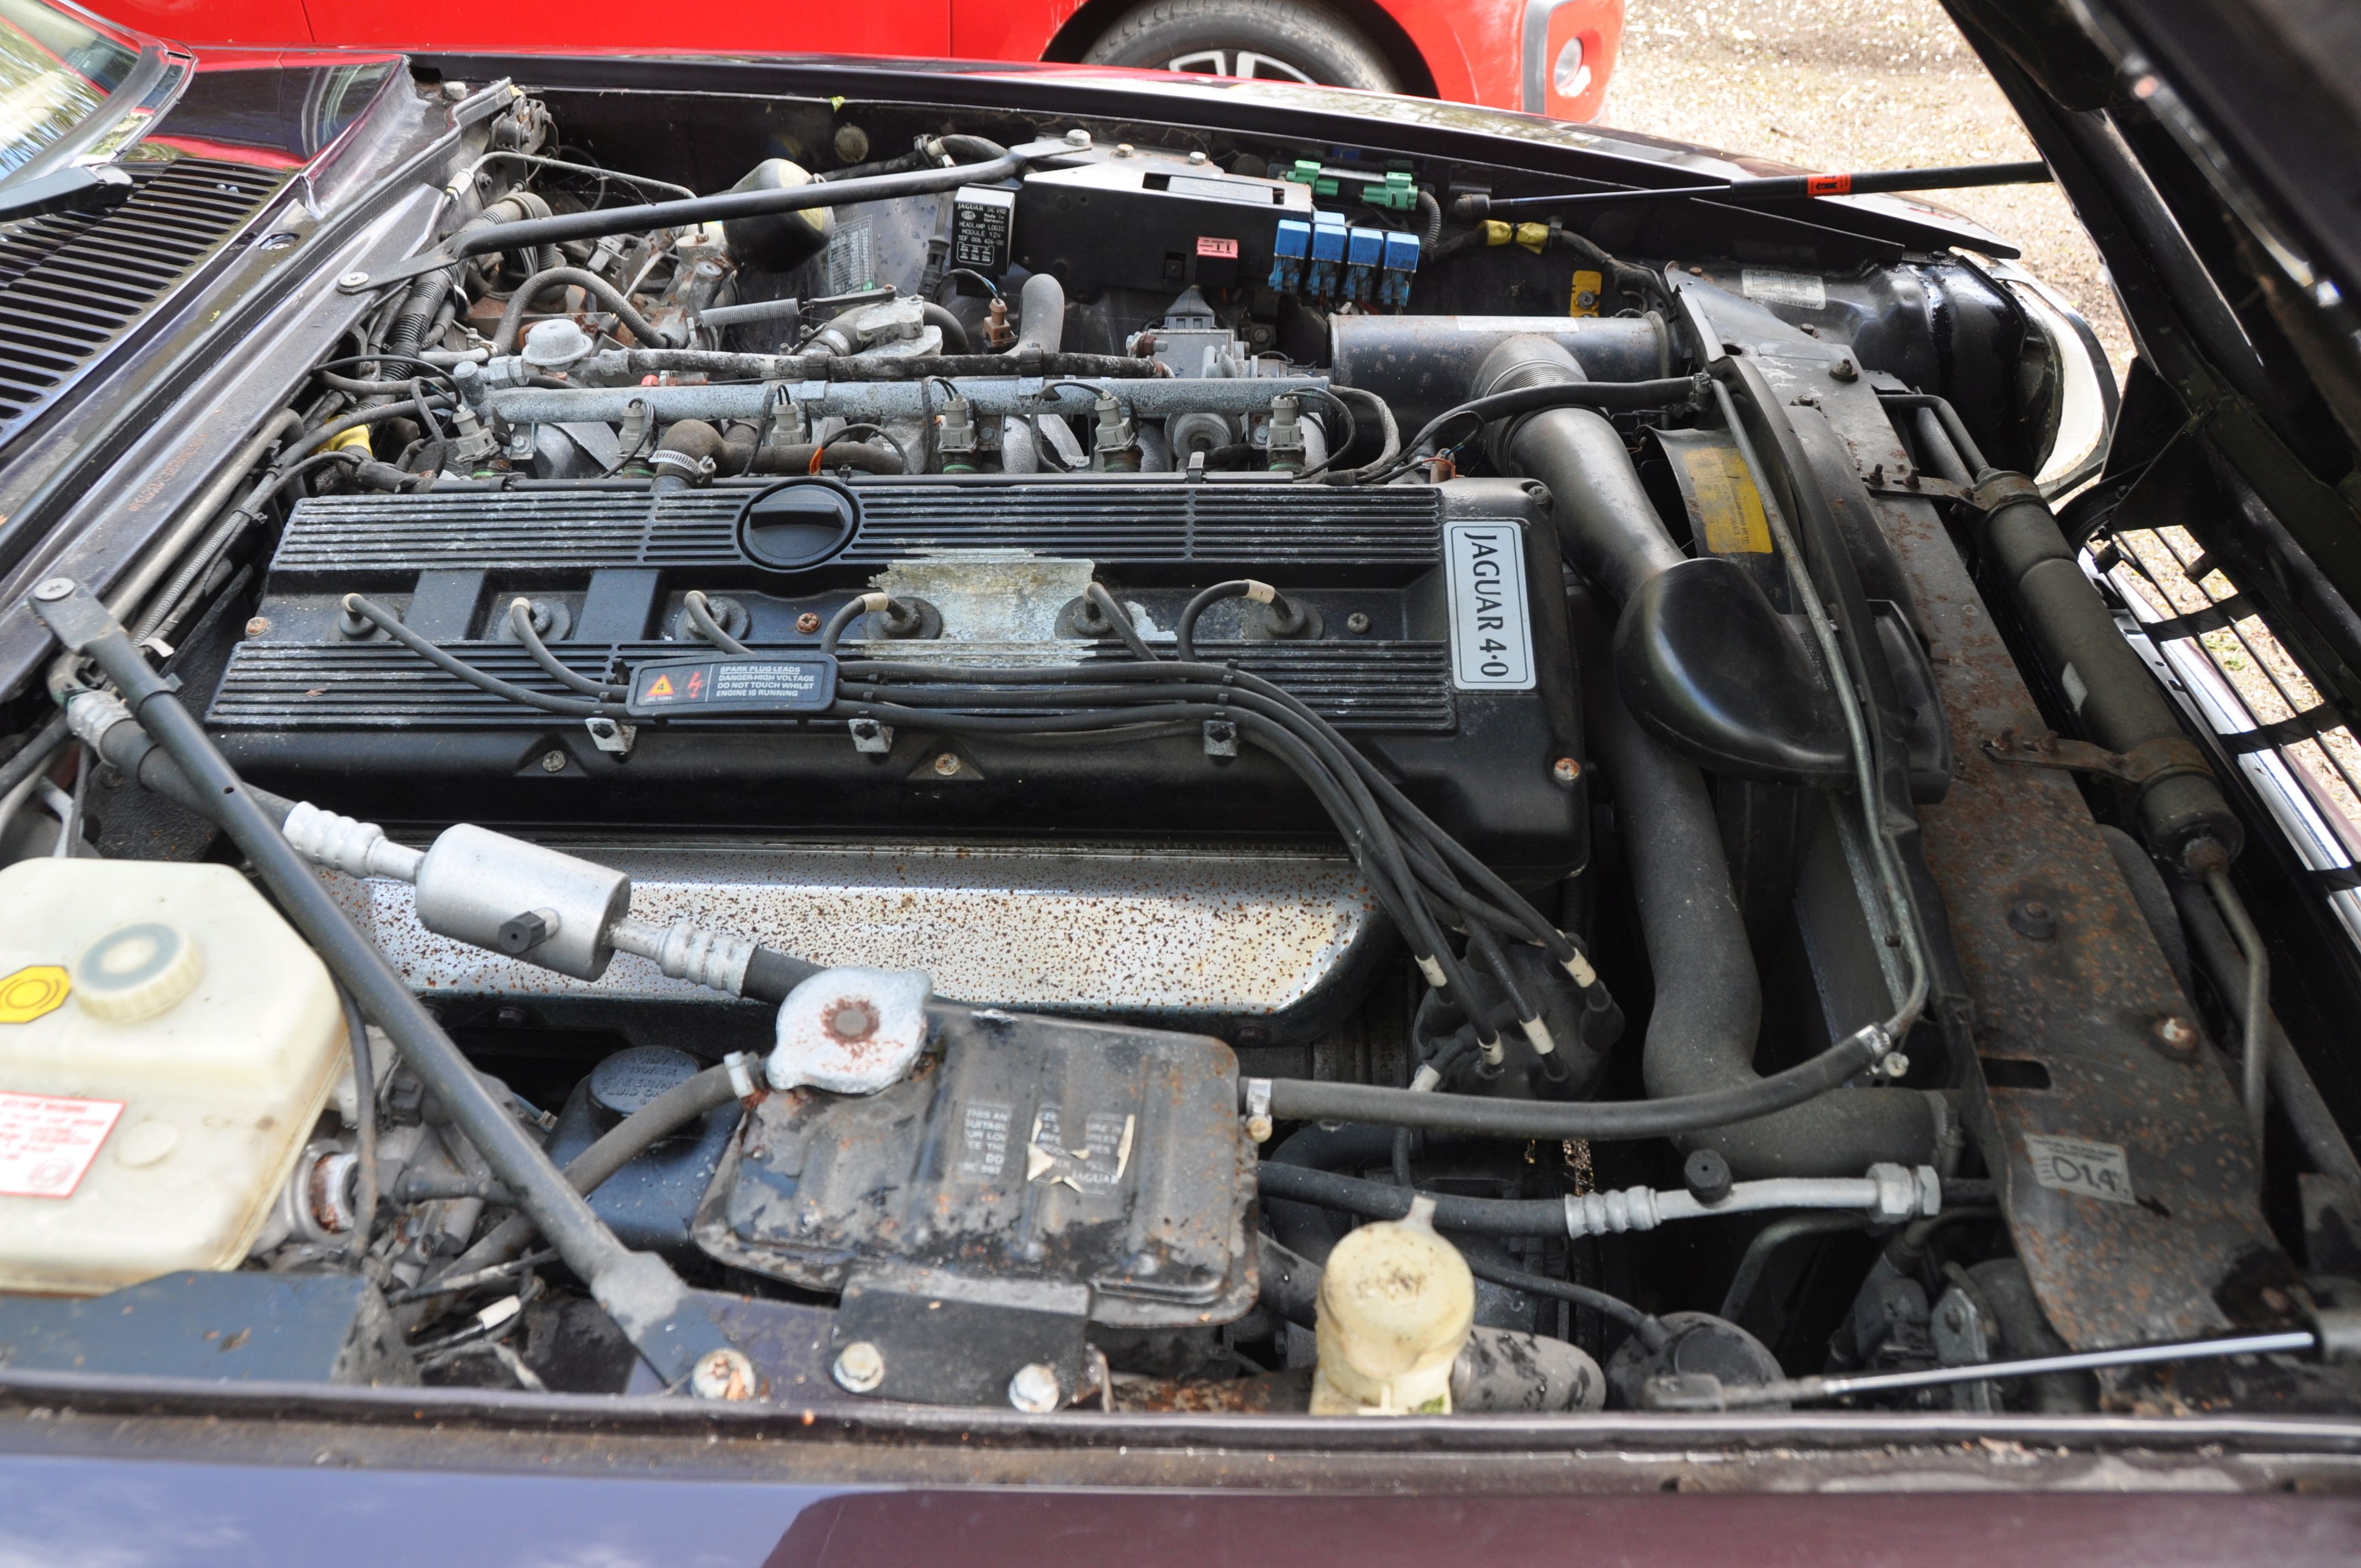 A 1994 JAGUAR XJ-S 4.0 AUTO SPORTS SALOON CAR in burgundy, 3980cc straight 6 cylinder petrol engine, - Image 22 of 26